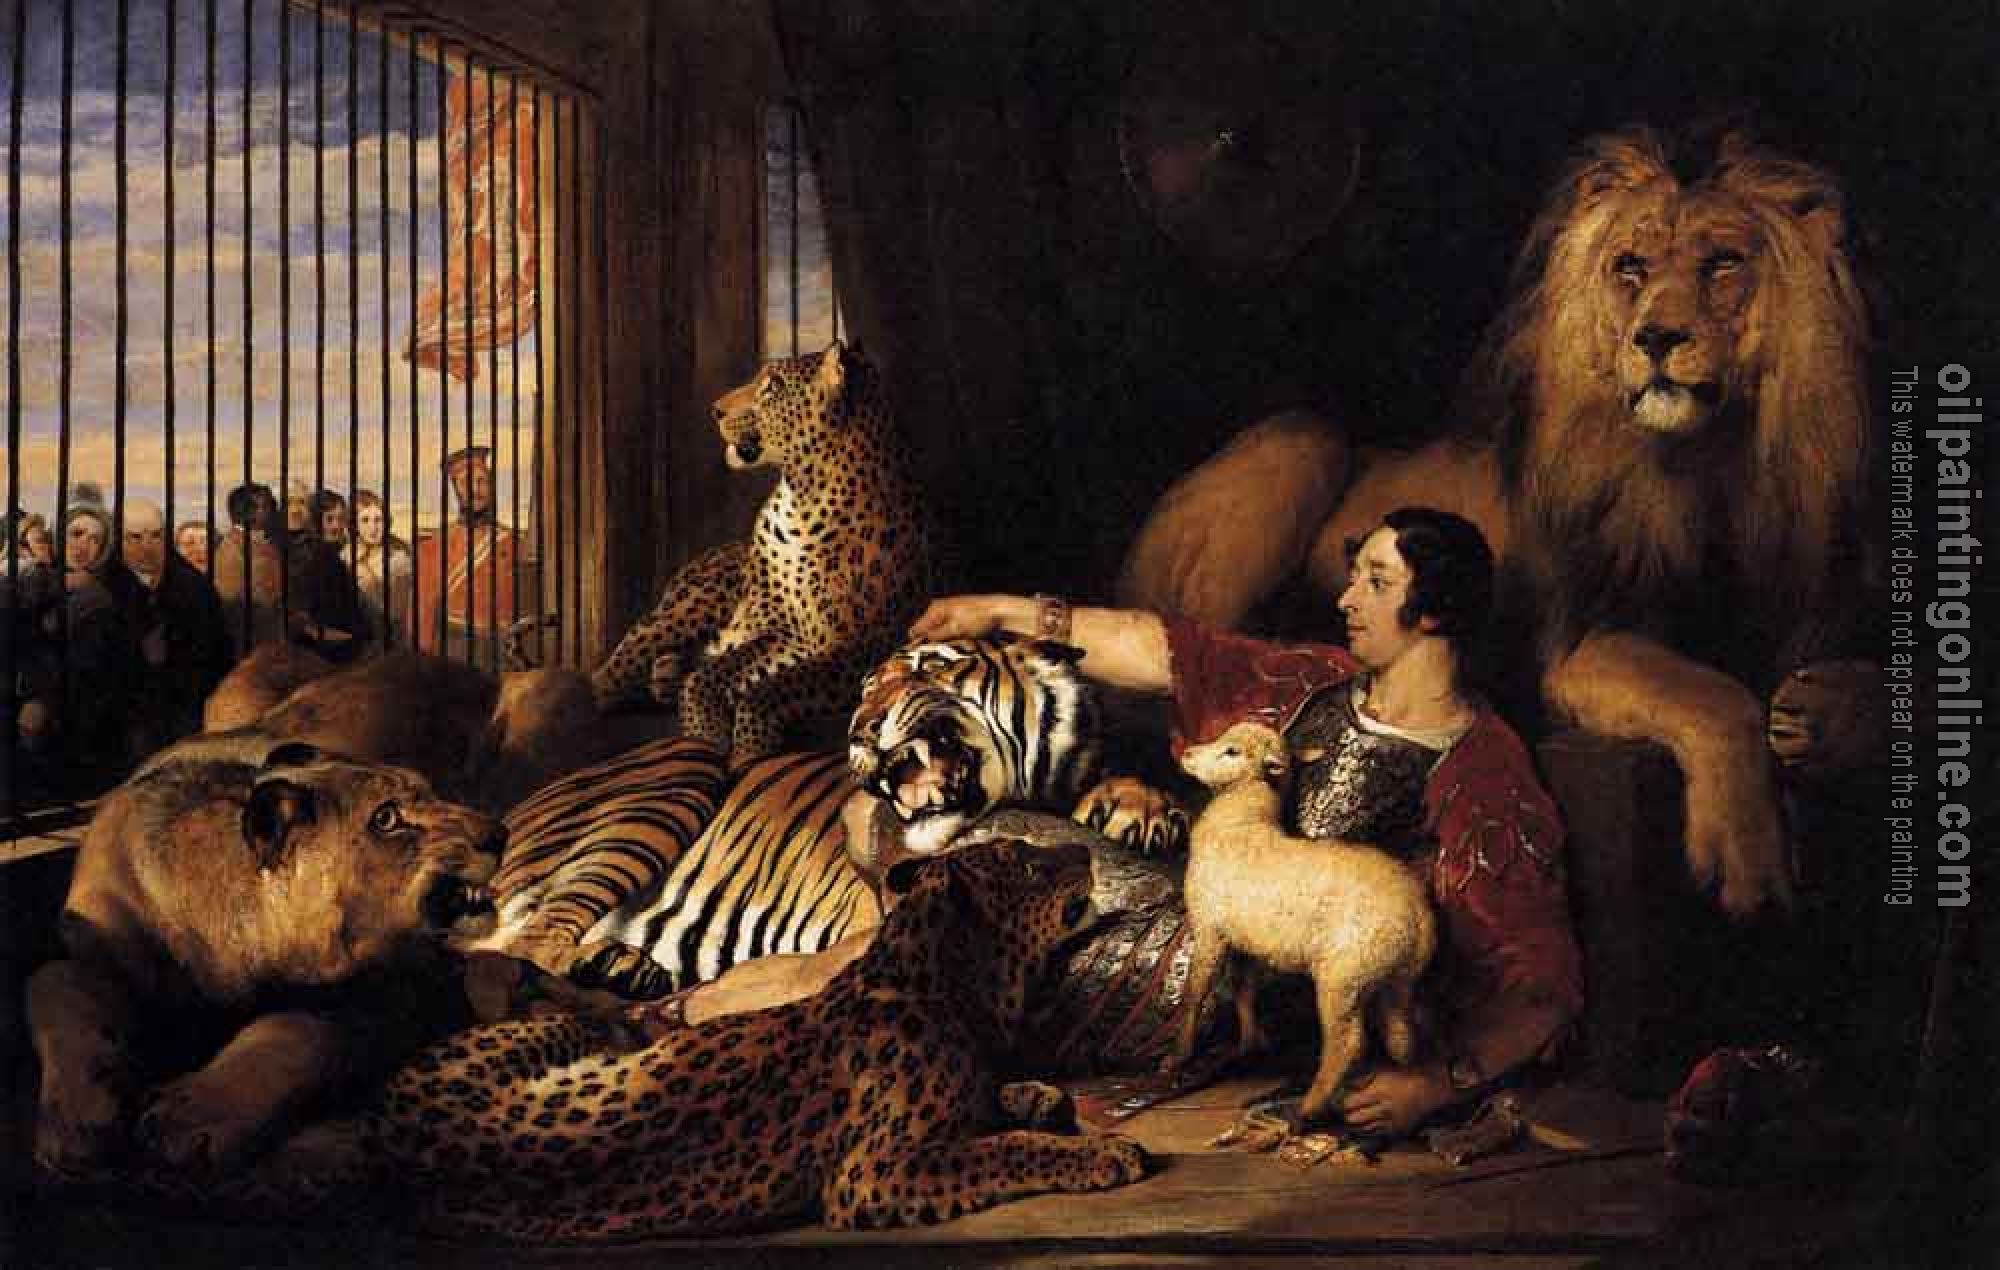 Landseer, Sir Edwin Henry - Isaac van Amburgh and his Animals